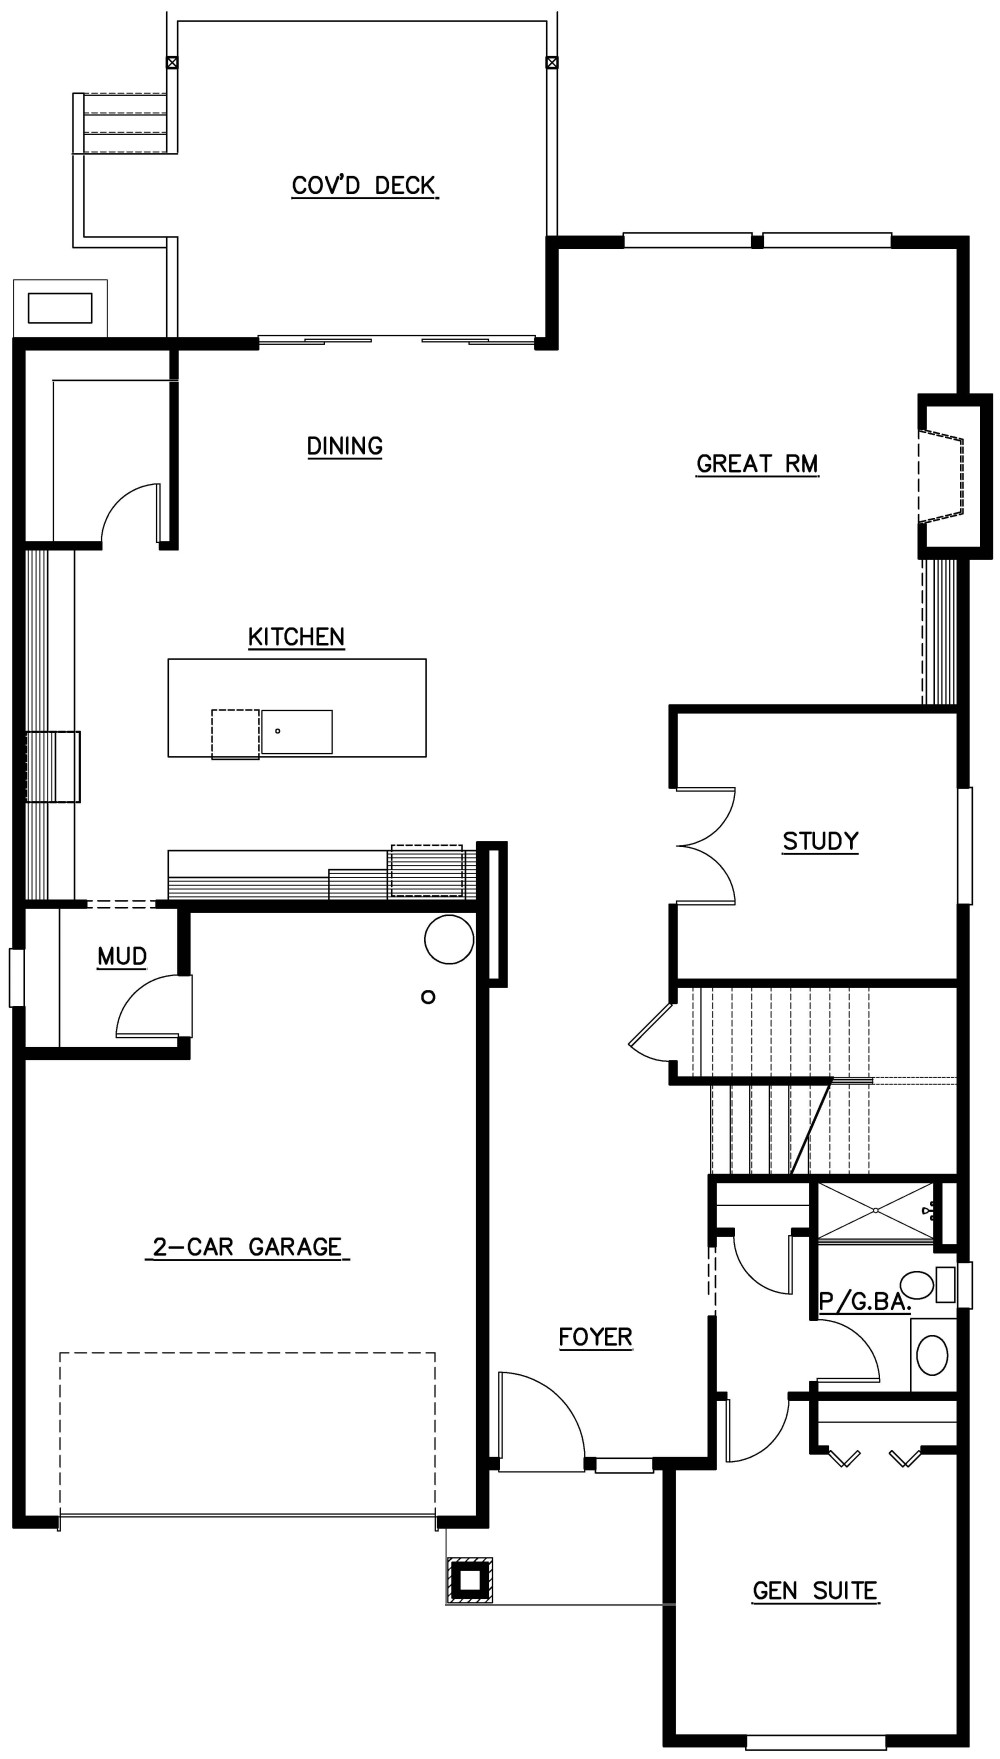 Main Floor Plan floorplan for the Shearwater - Lot 9 home